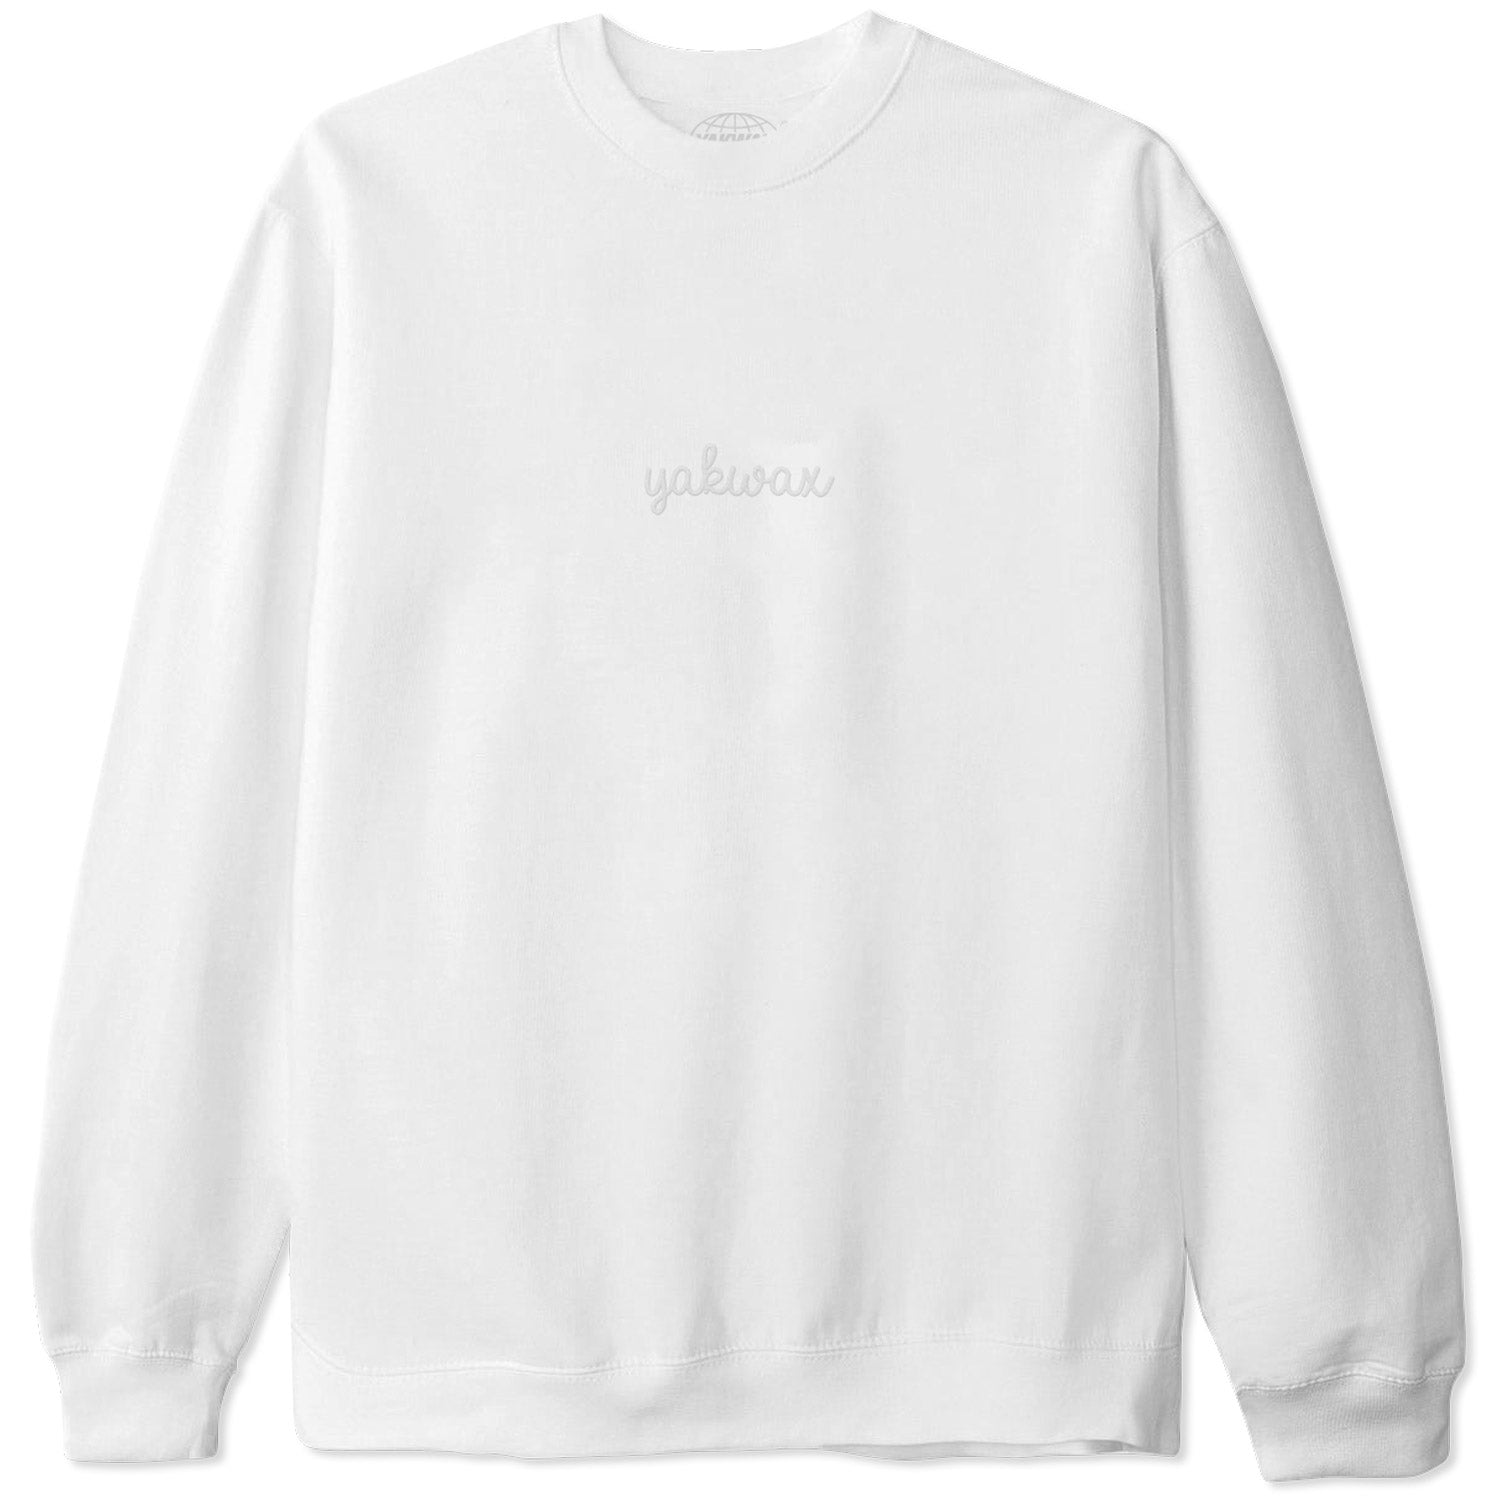 Yakwax Doodle Embroidered Crewneck Sweater - White/White - Mens Crew Neck Sweatshirt by Yakwax